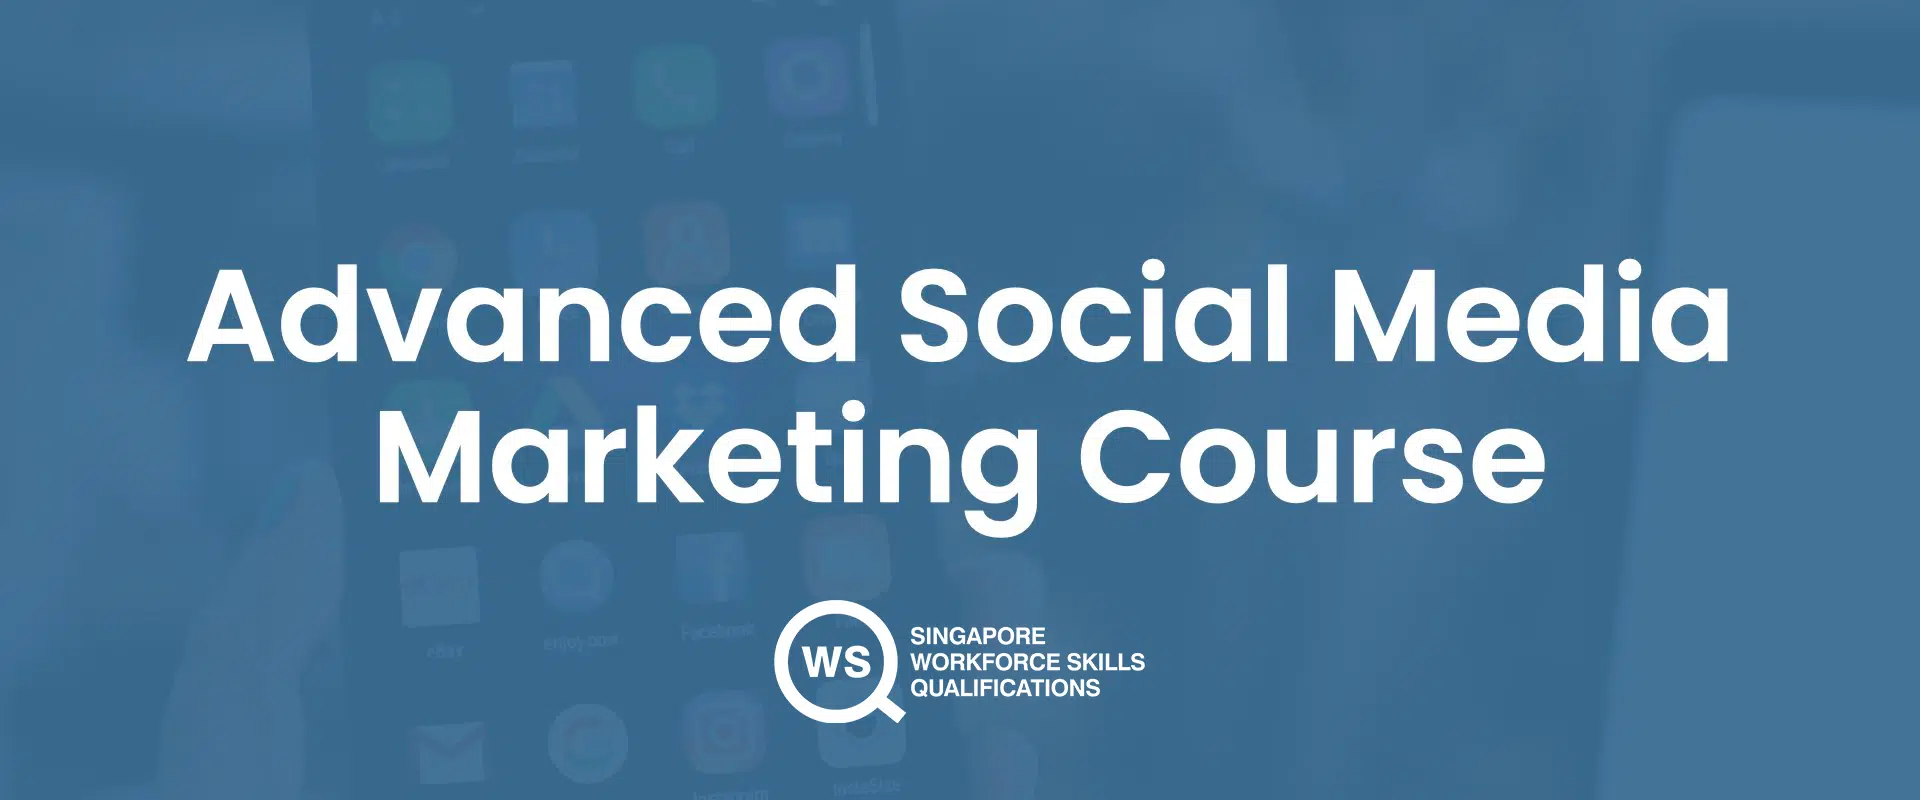 Advanced social media marketing course cover